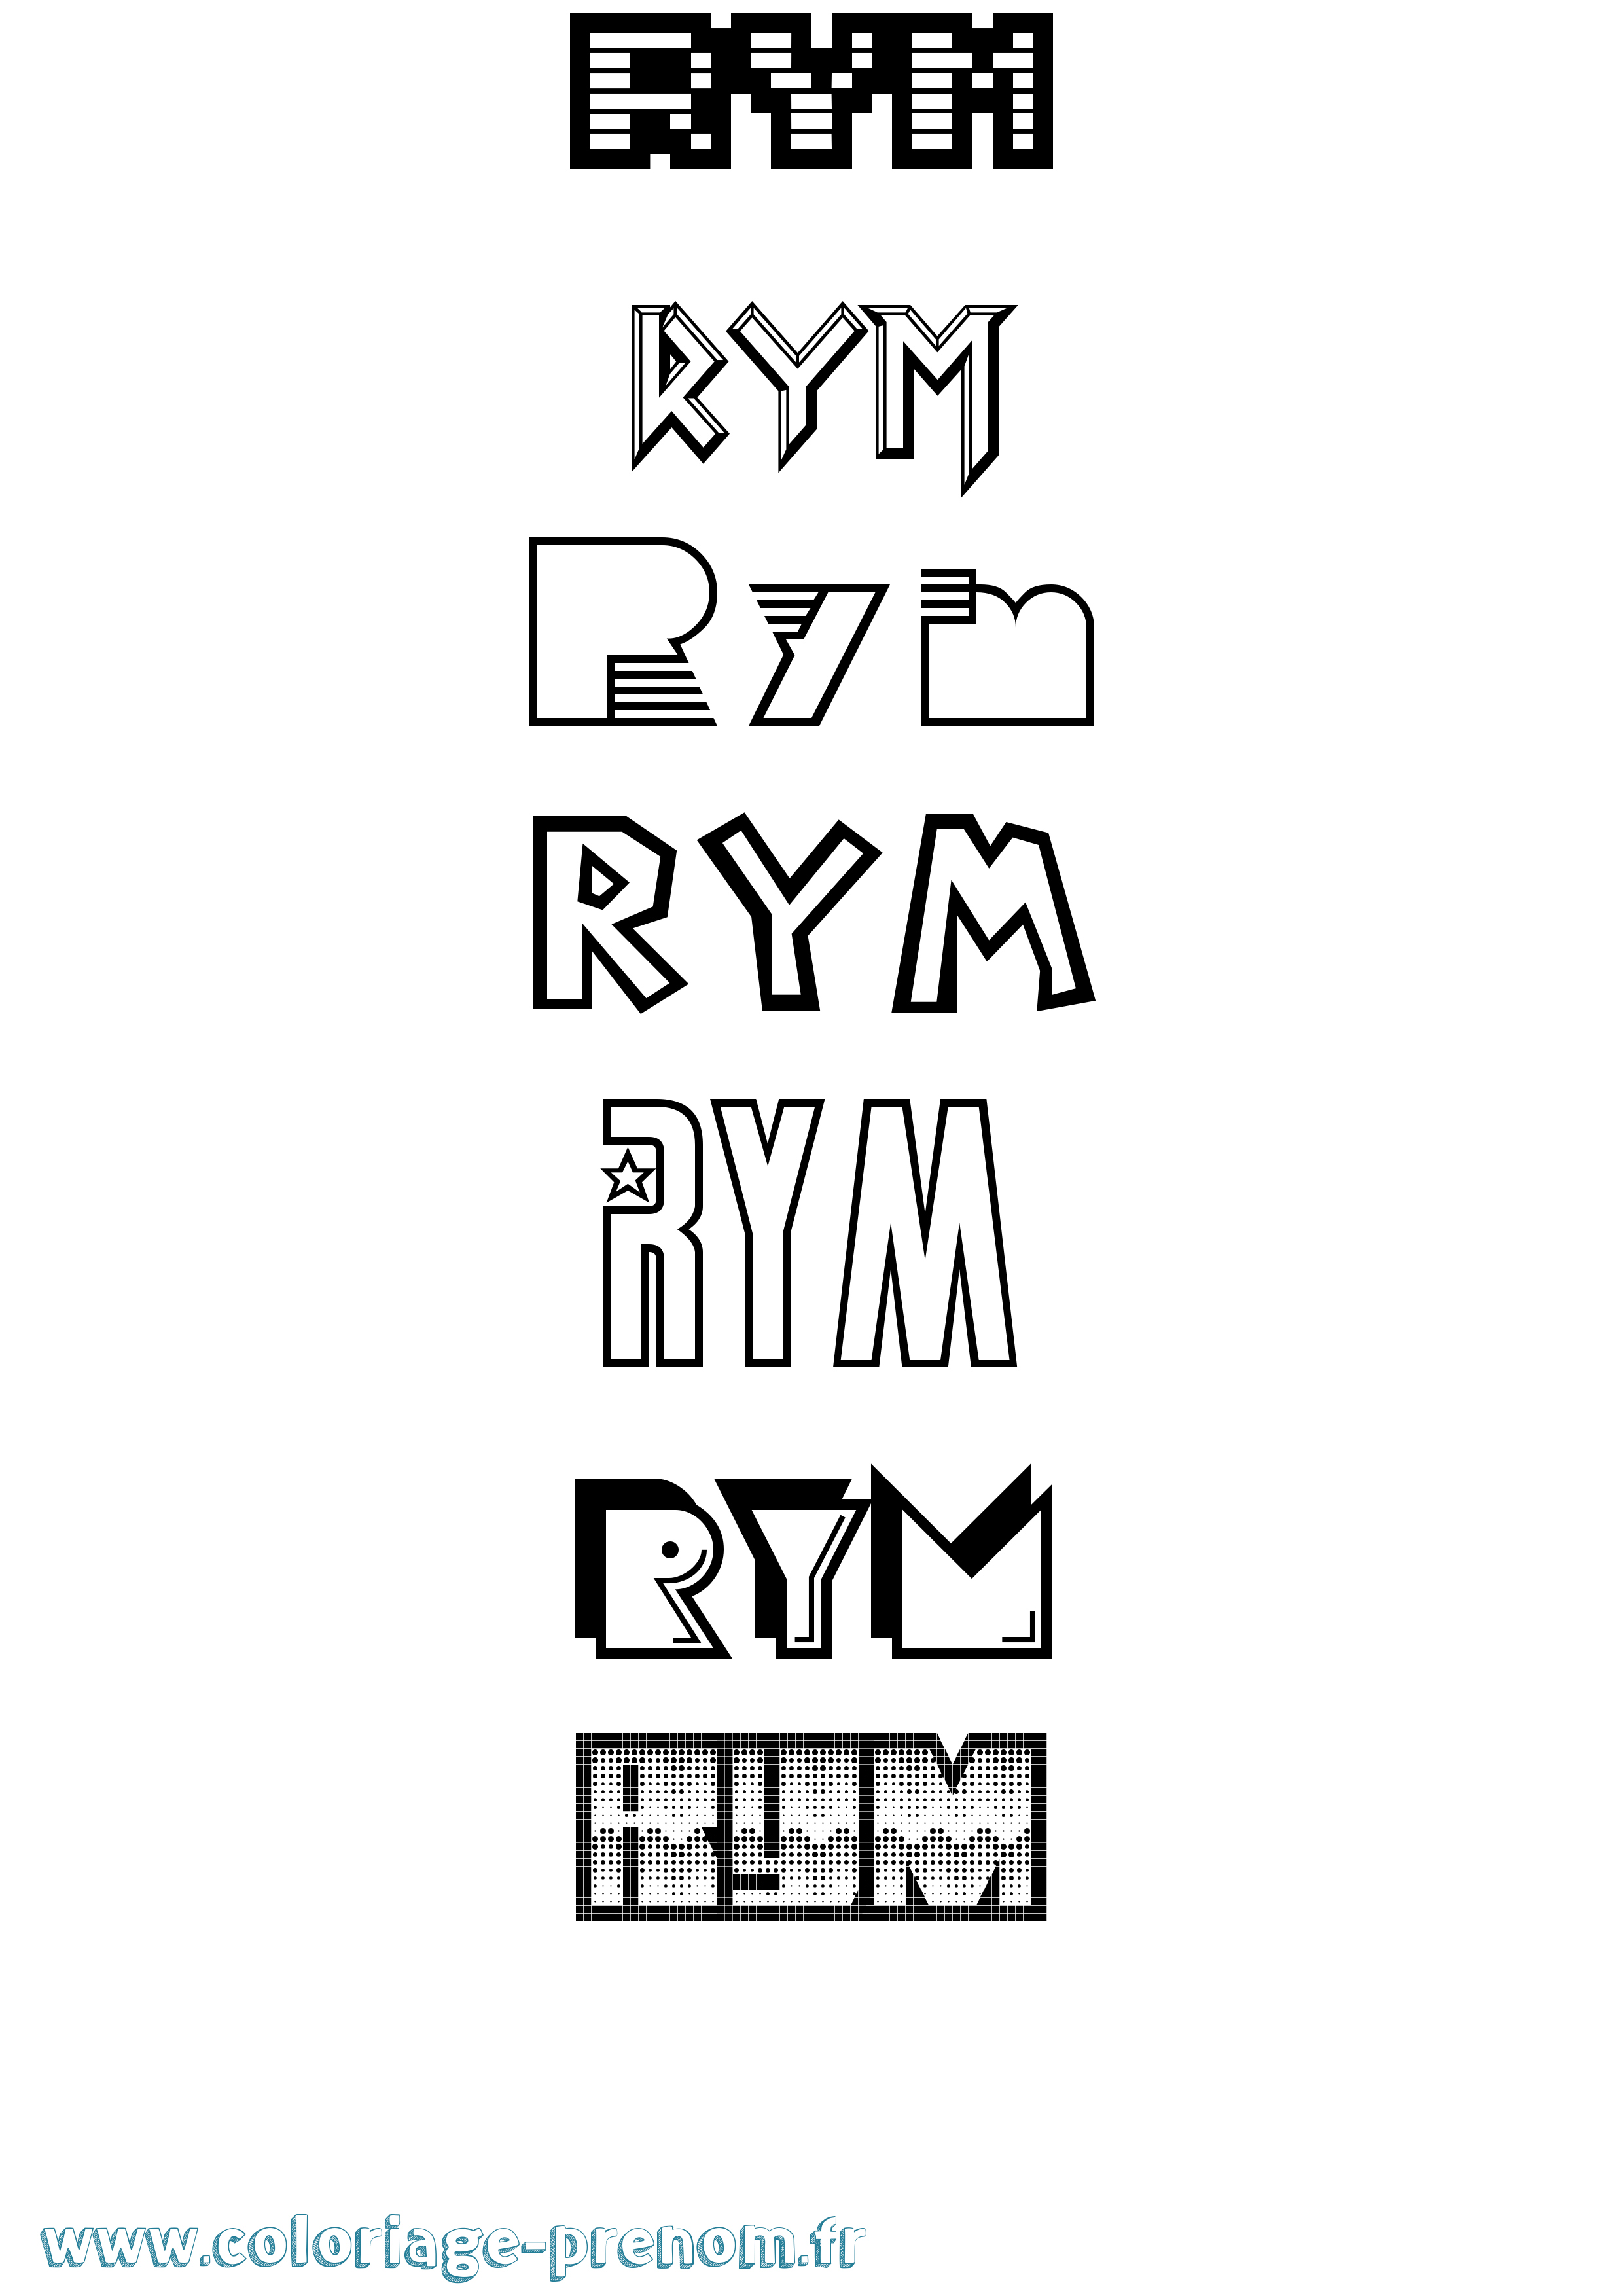 Coloriage prénom Rym